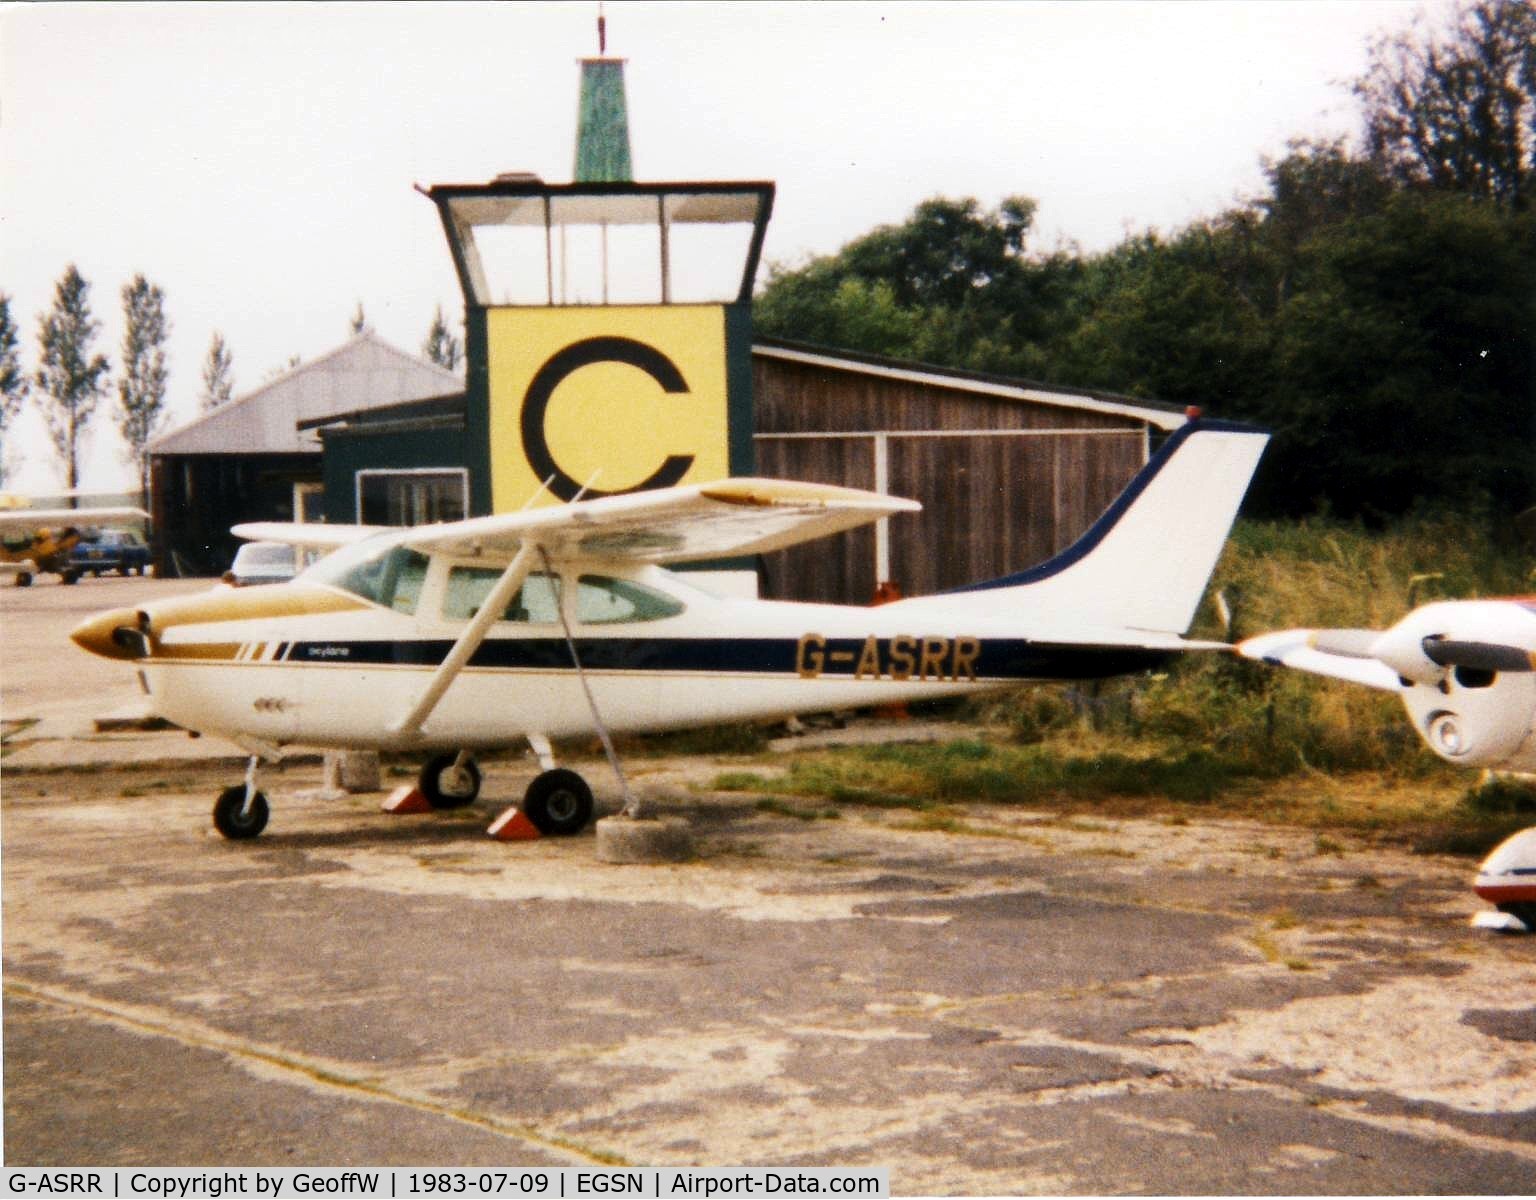 G-ASRR, 1964 Cessna 182G Skylane C/N 182-55135, G-ASRR Cessna 182G based at Bourn in 1983